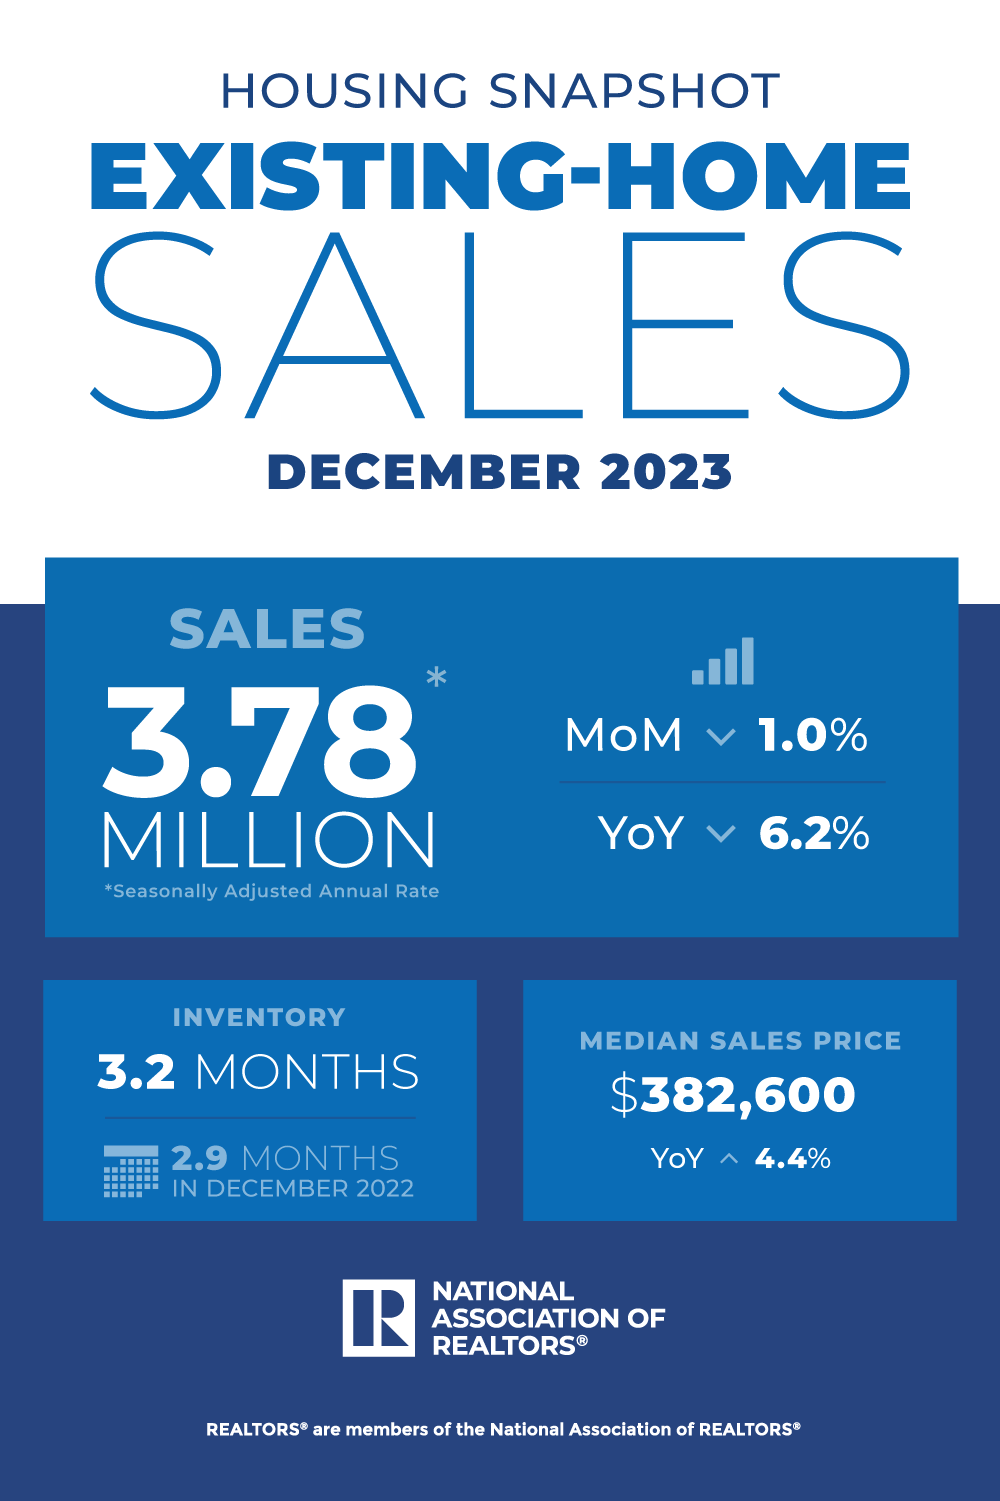 Existing-Home Sales Slid 1.0% in December